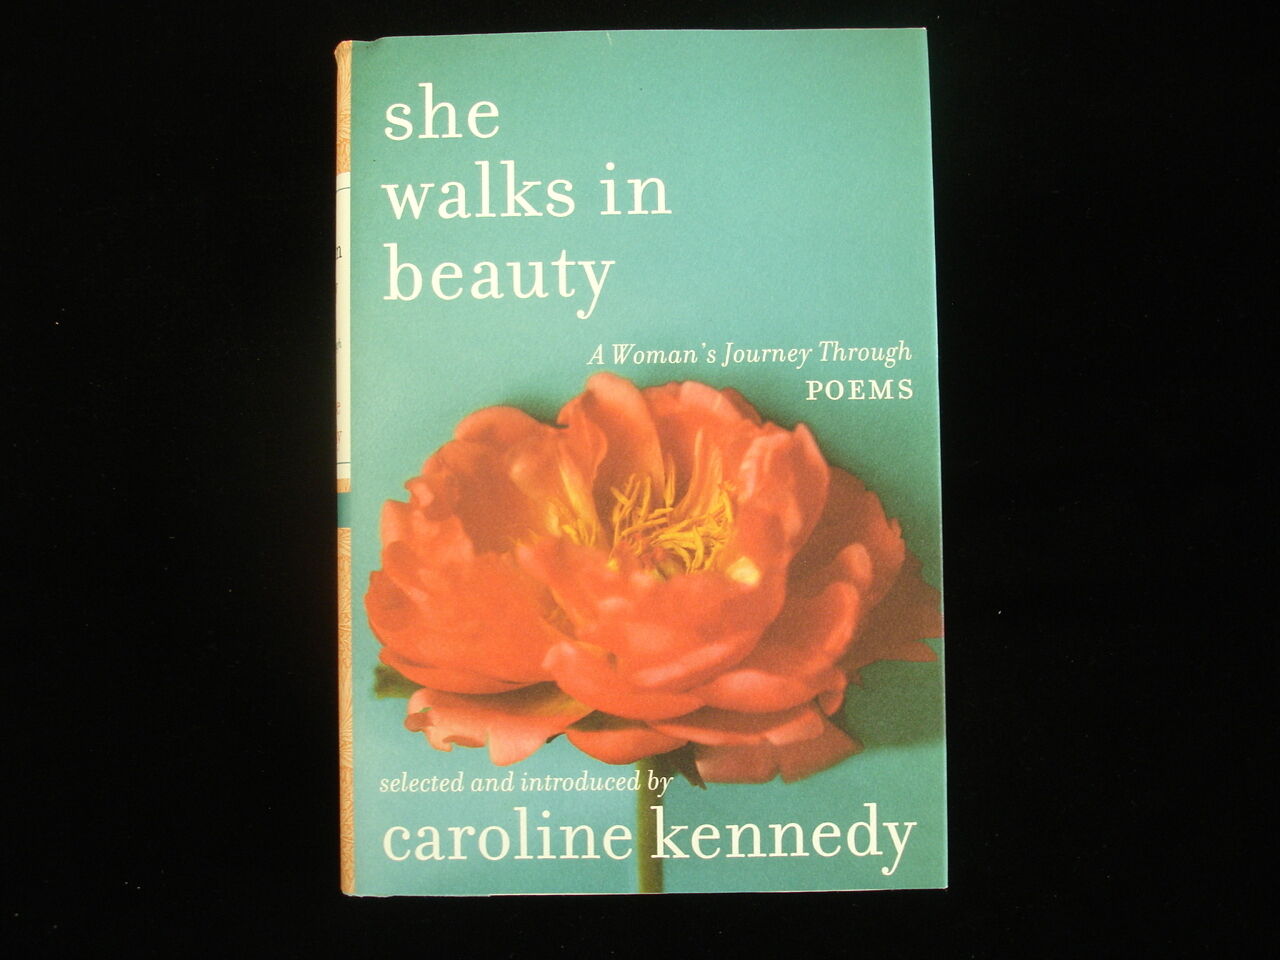 Caroline Kennedy Autographed Hardcover Poetry Book "She Walks in Beauty"